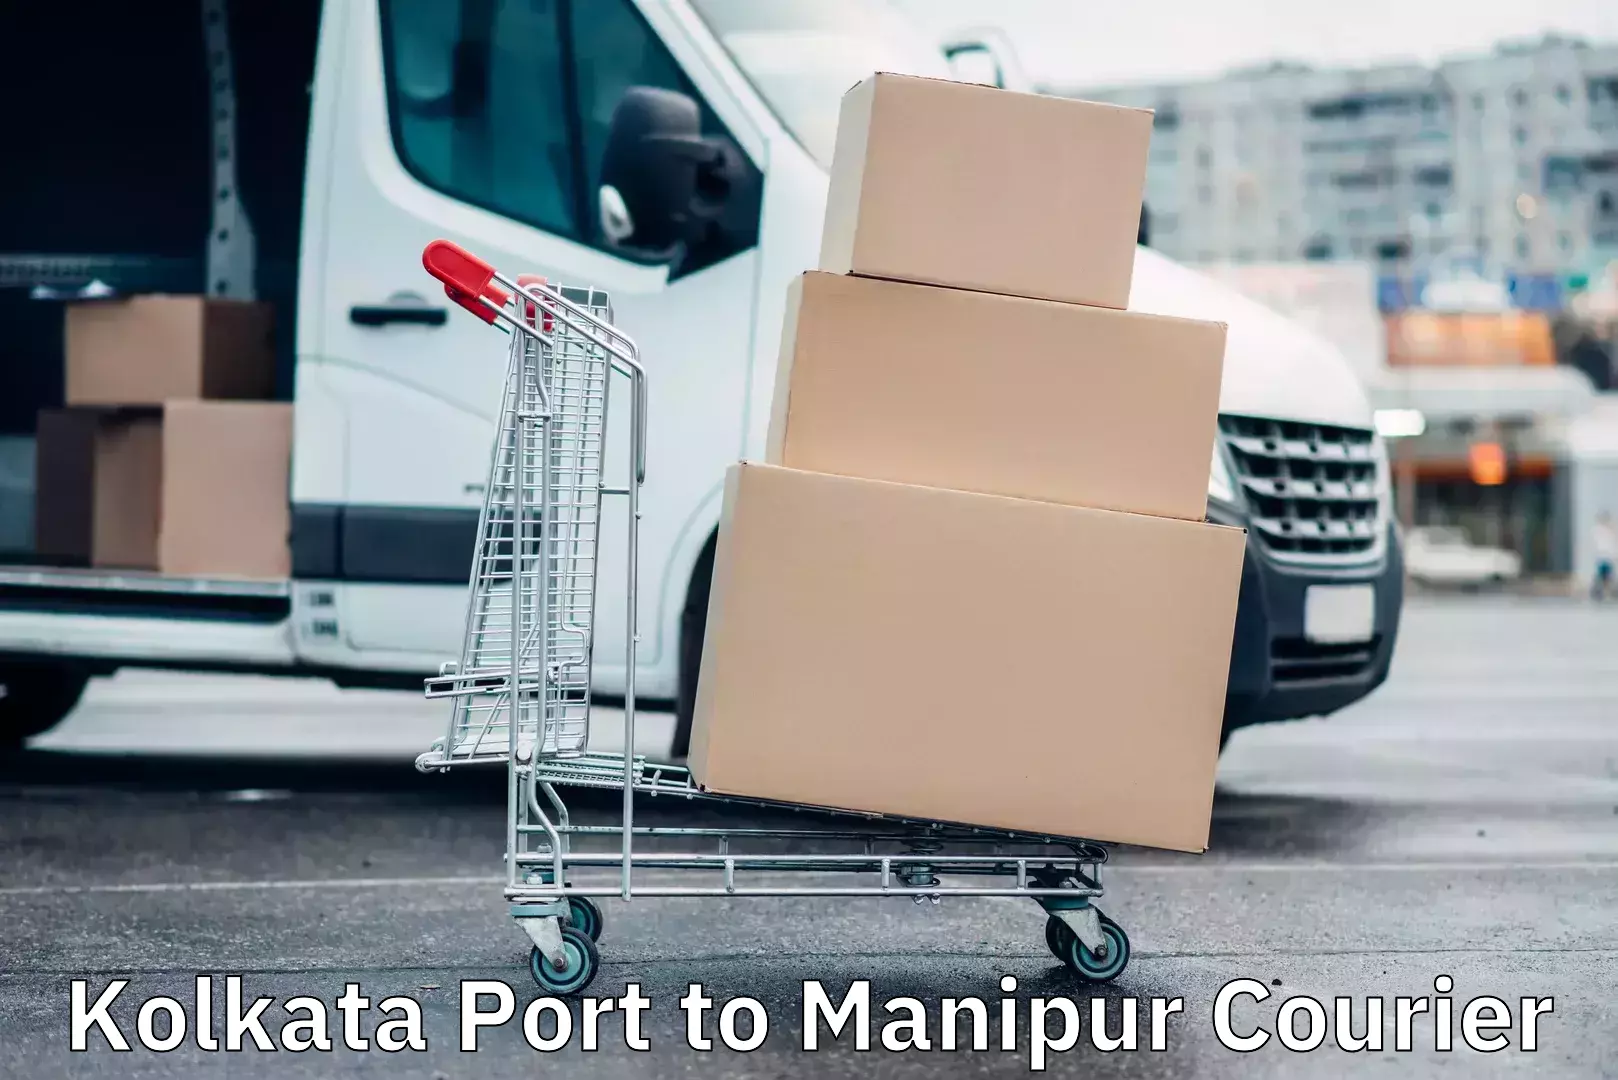 Modern delivery technologies Kolkata Port to Manipur